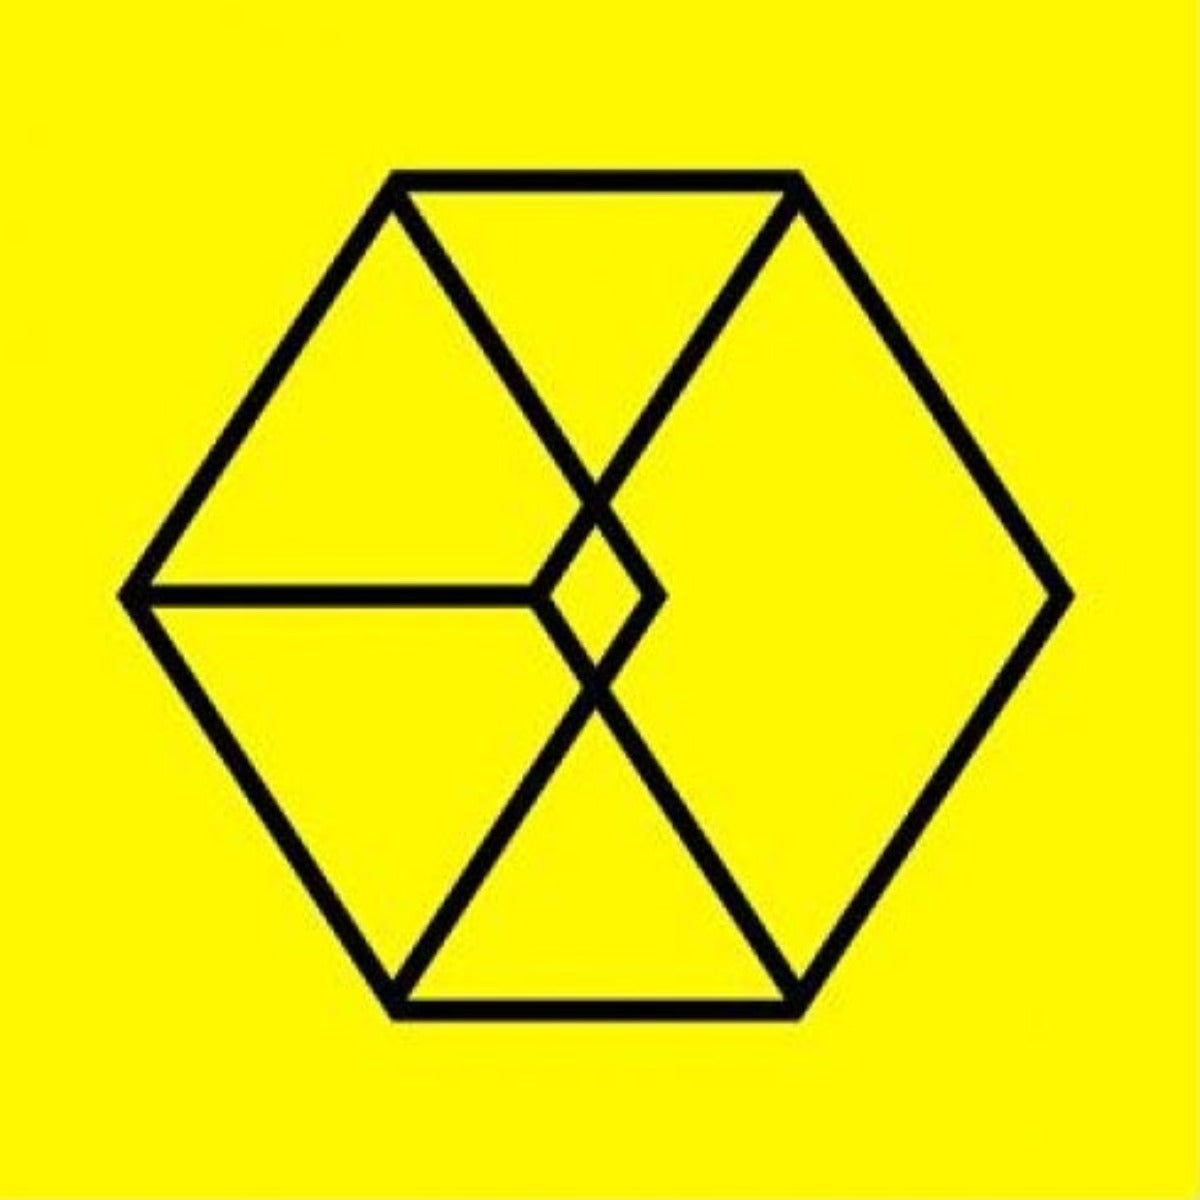 EXO Vol. 2 Repackage - Love Me Right (Korean Version)